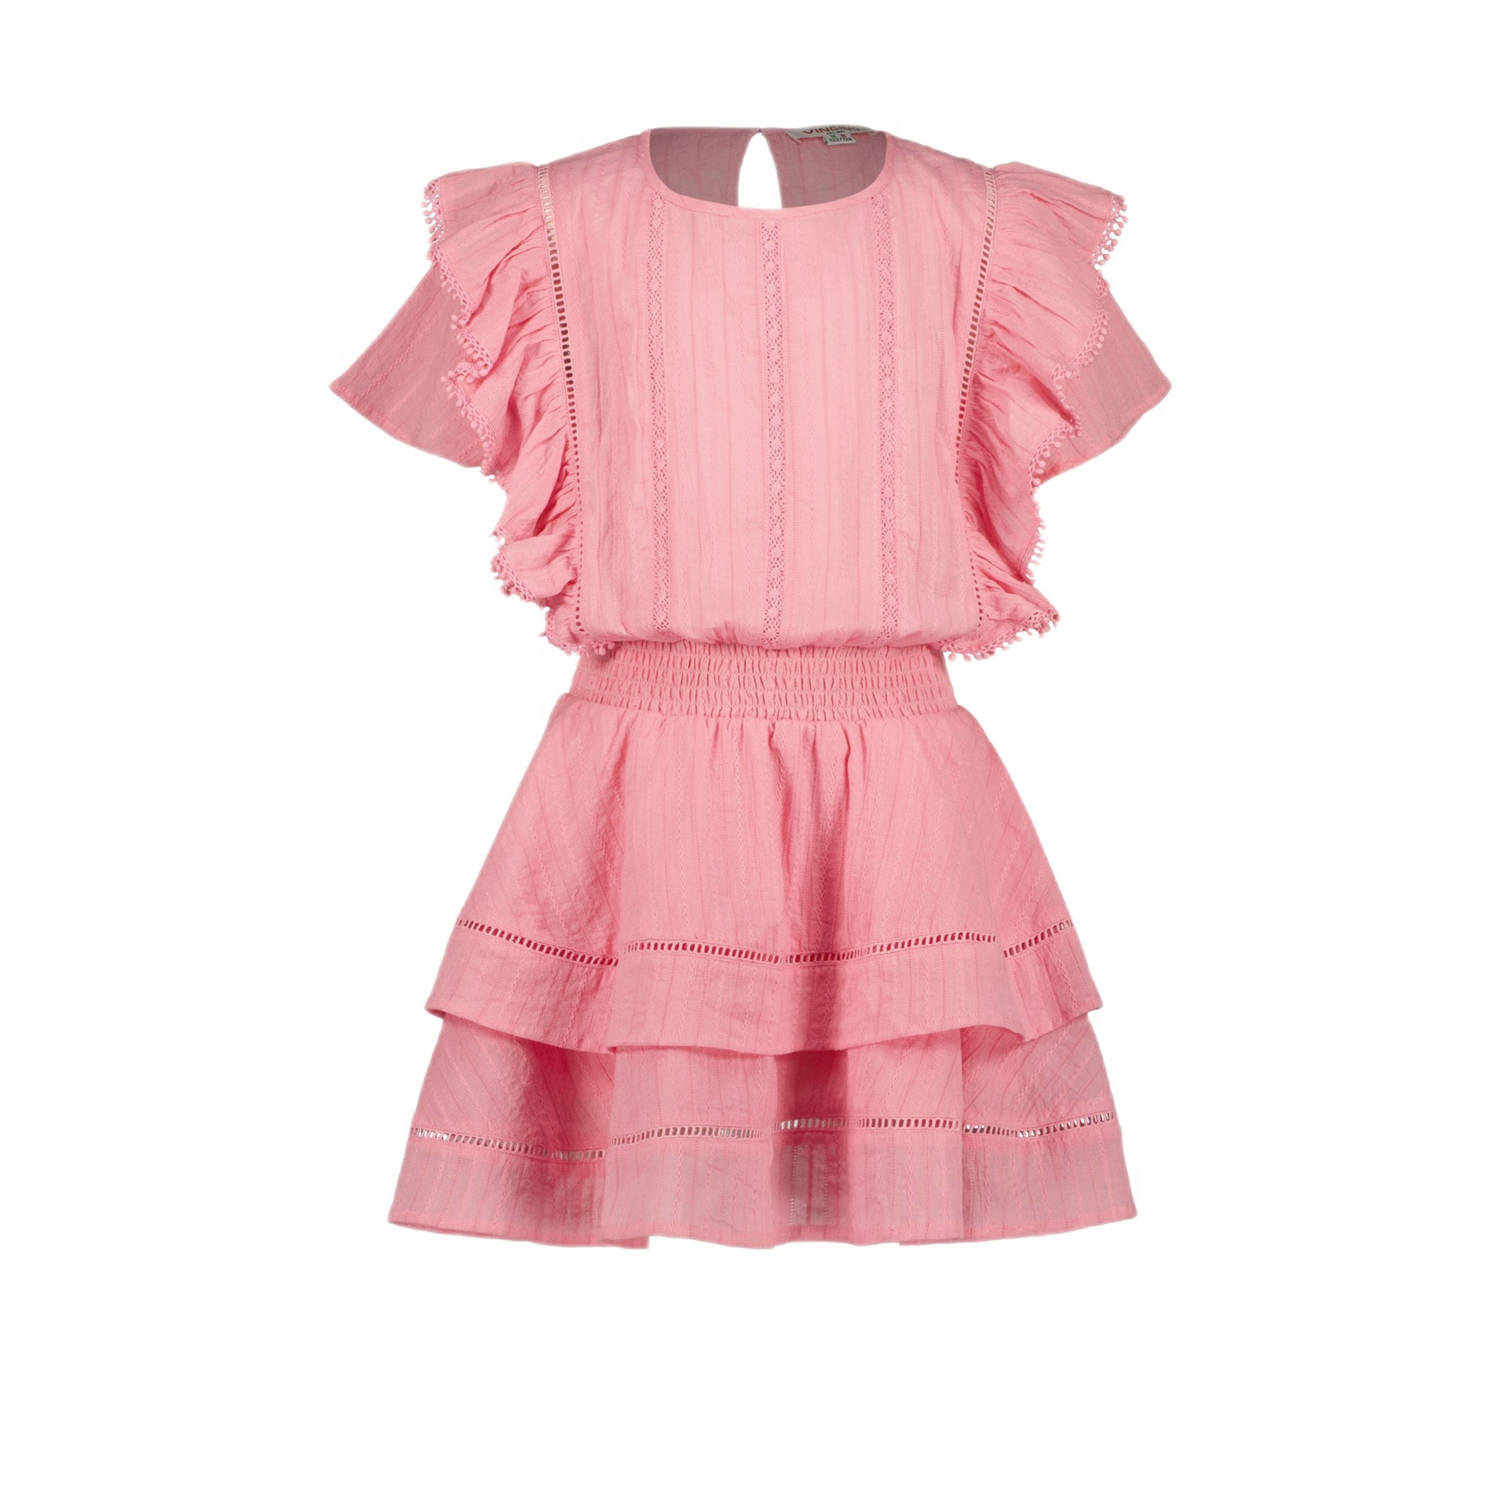 VINGINO jurk Pleun met ruches roze Meisjes Katoen Ronde hals Effen 128